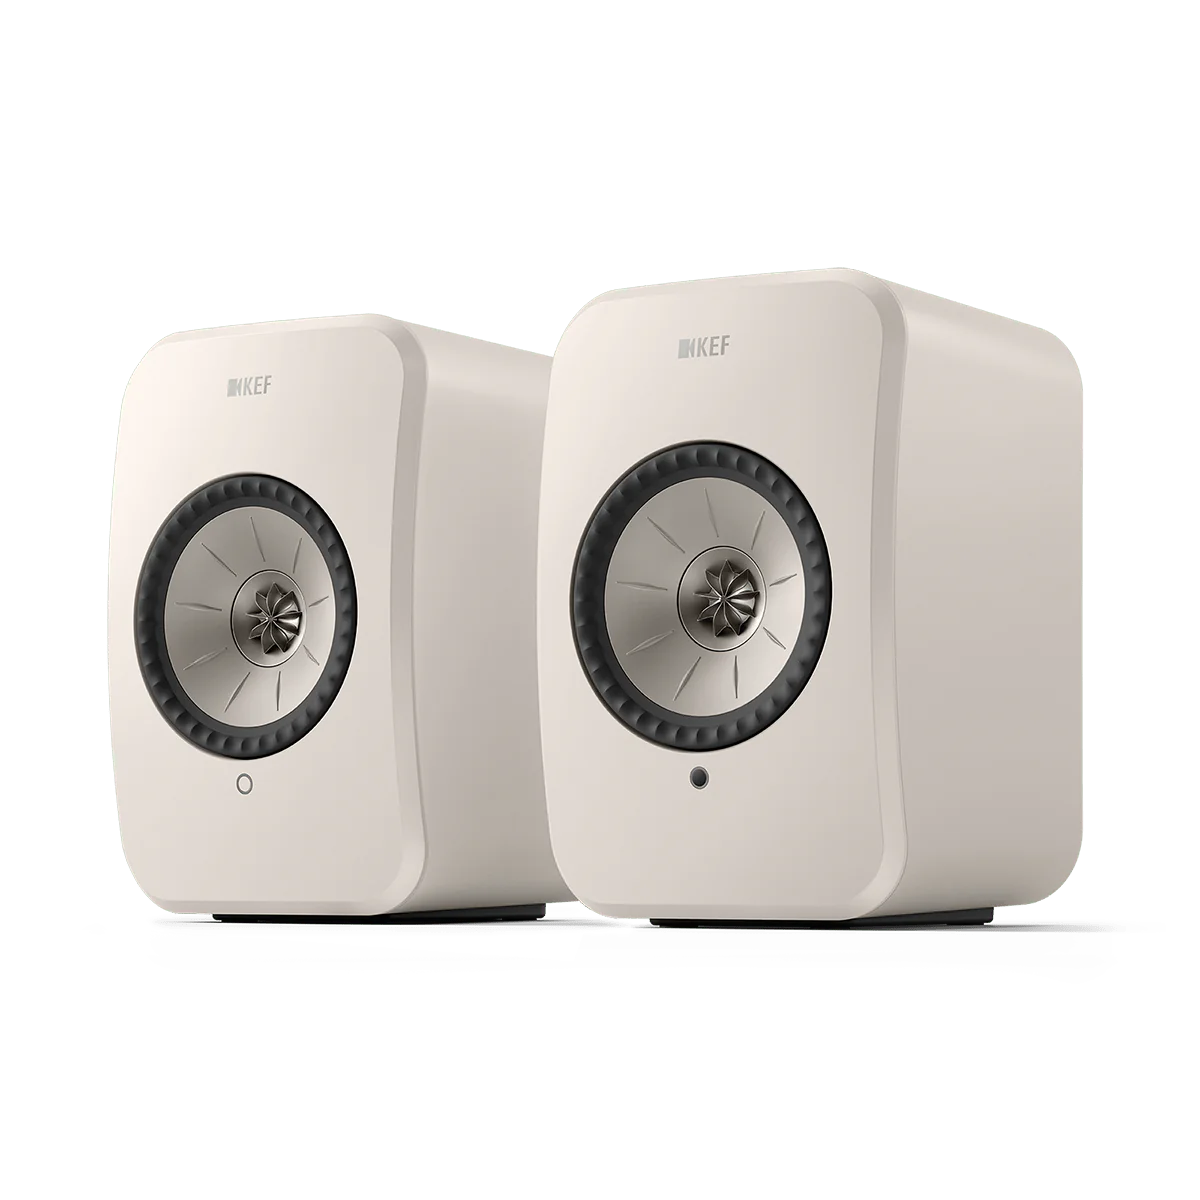 KEF LSX II LT Wireless Active Hi-Fi Speakers #colour_stone white